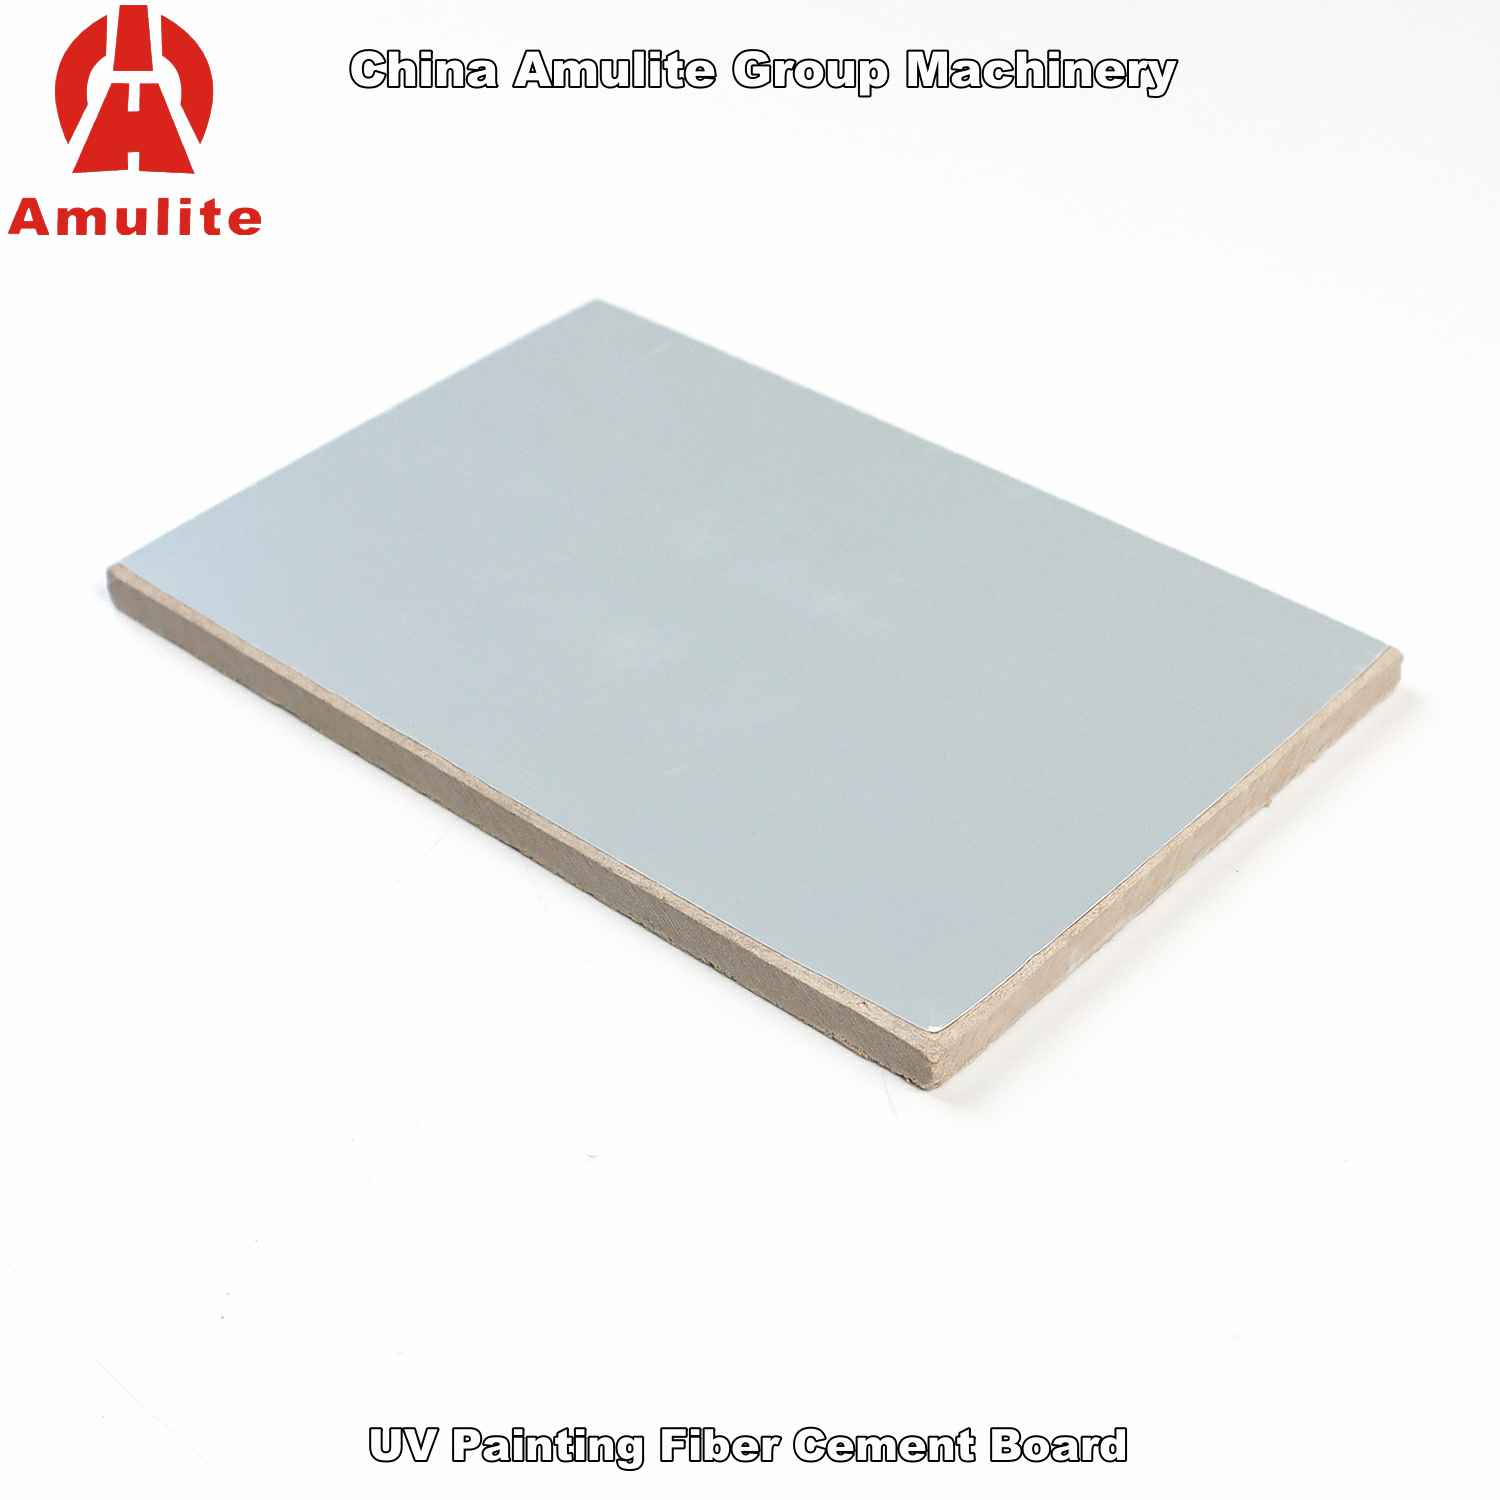 UV Painting Fiber Cement Board (9)